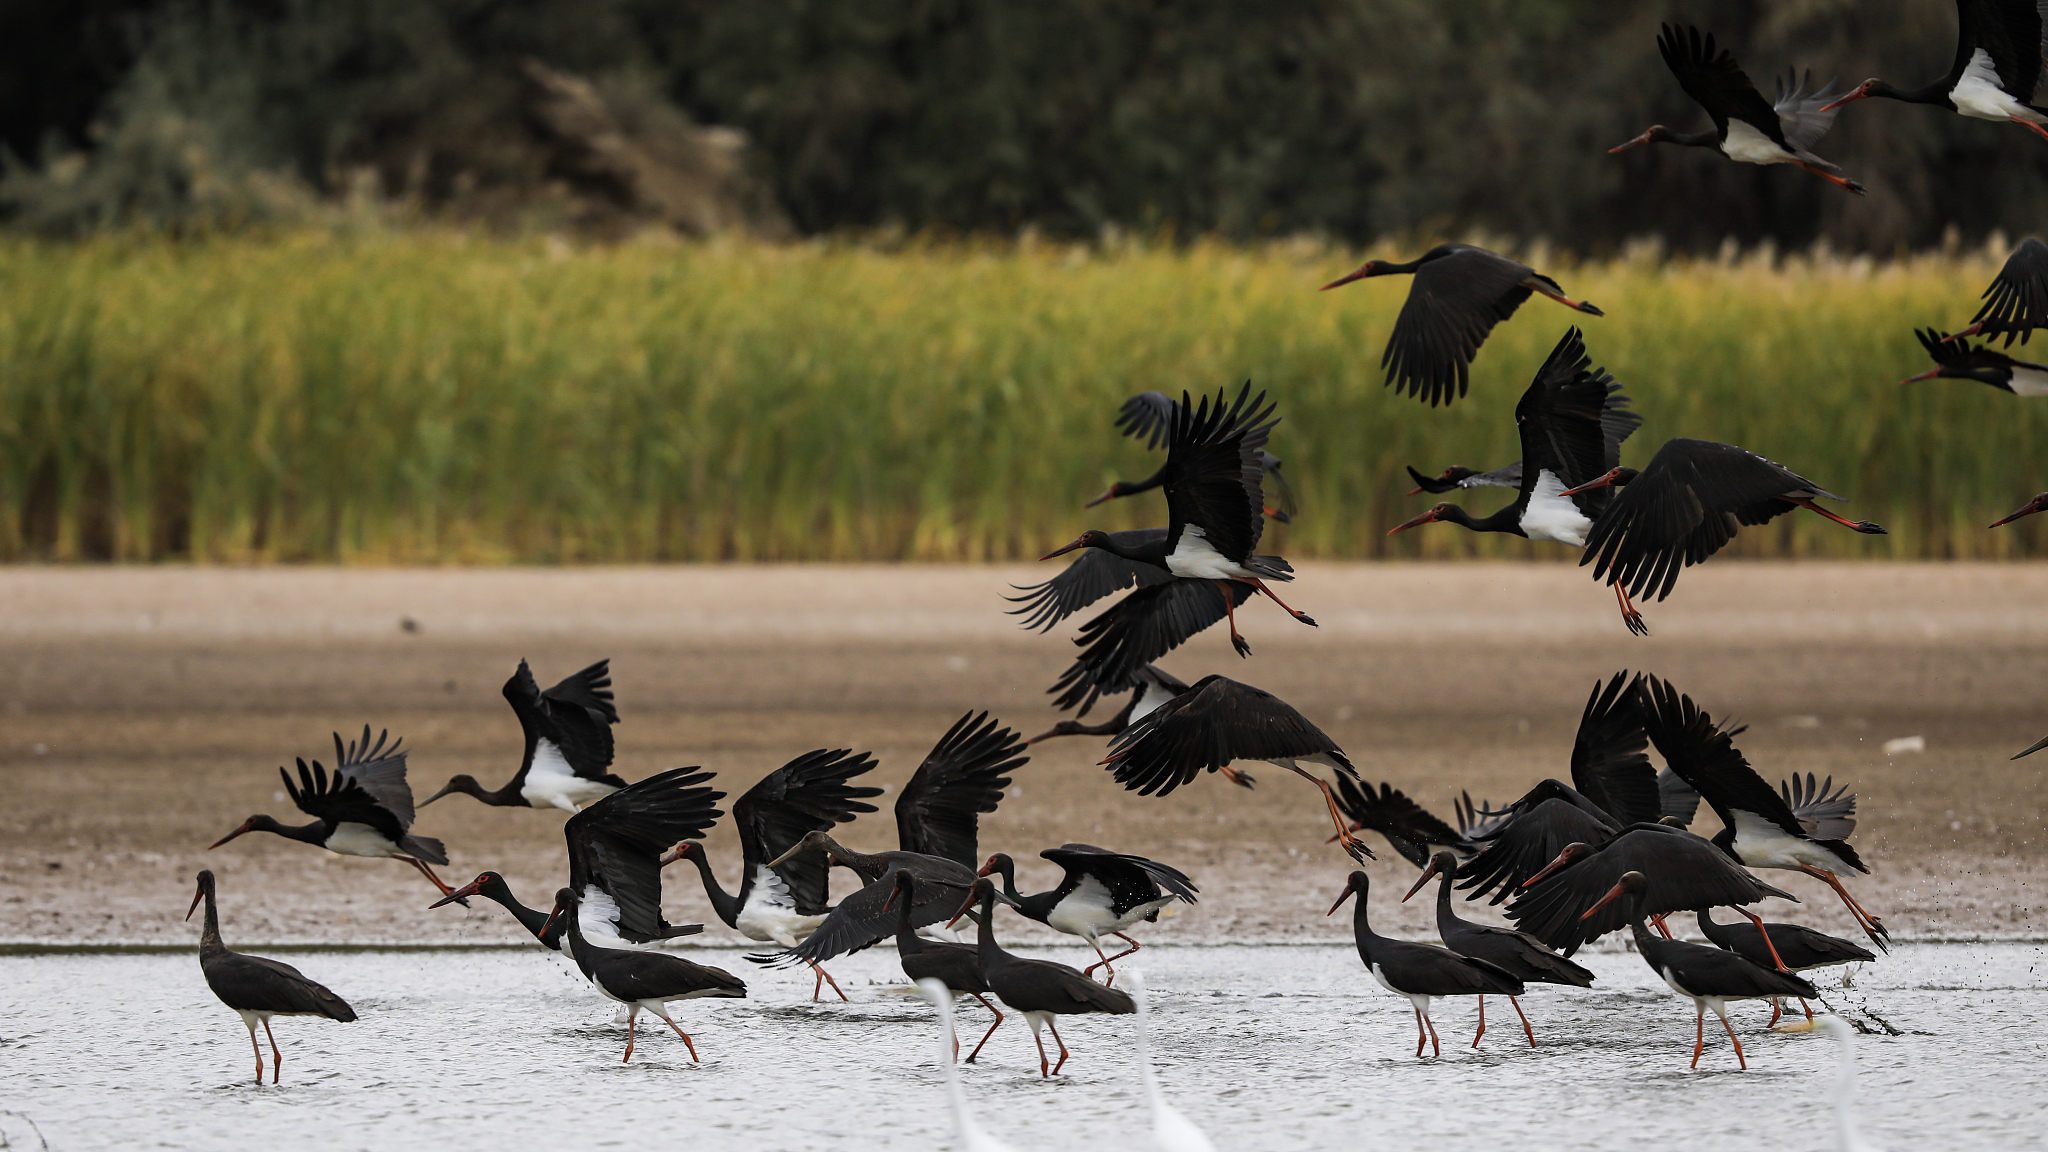 Northwest China's wetland becomes migratory bird heaven